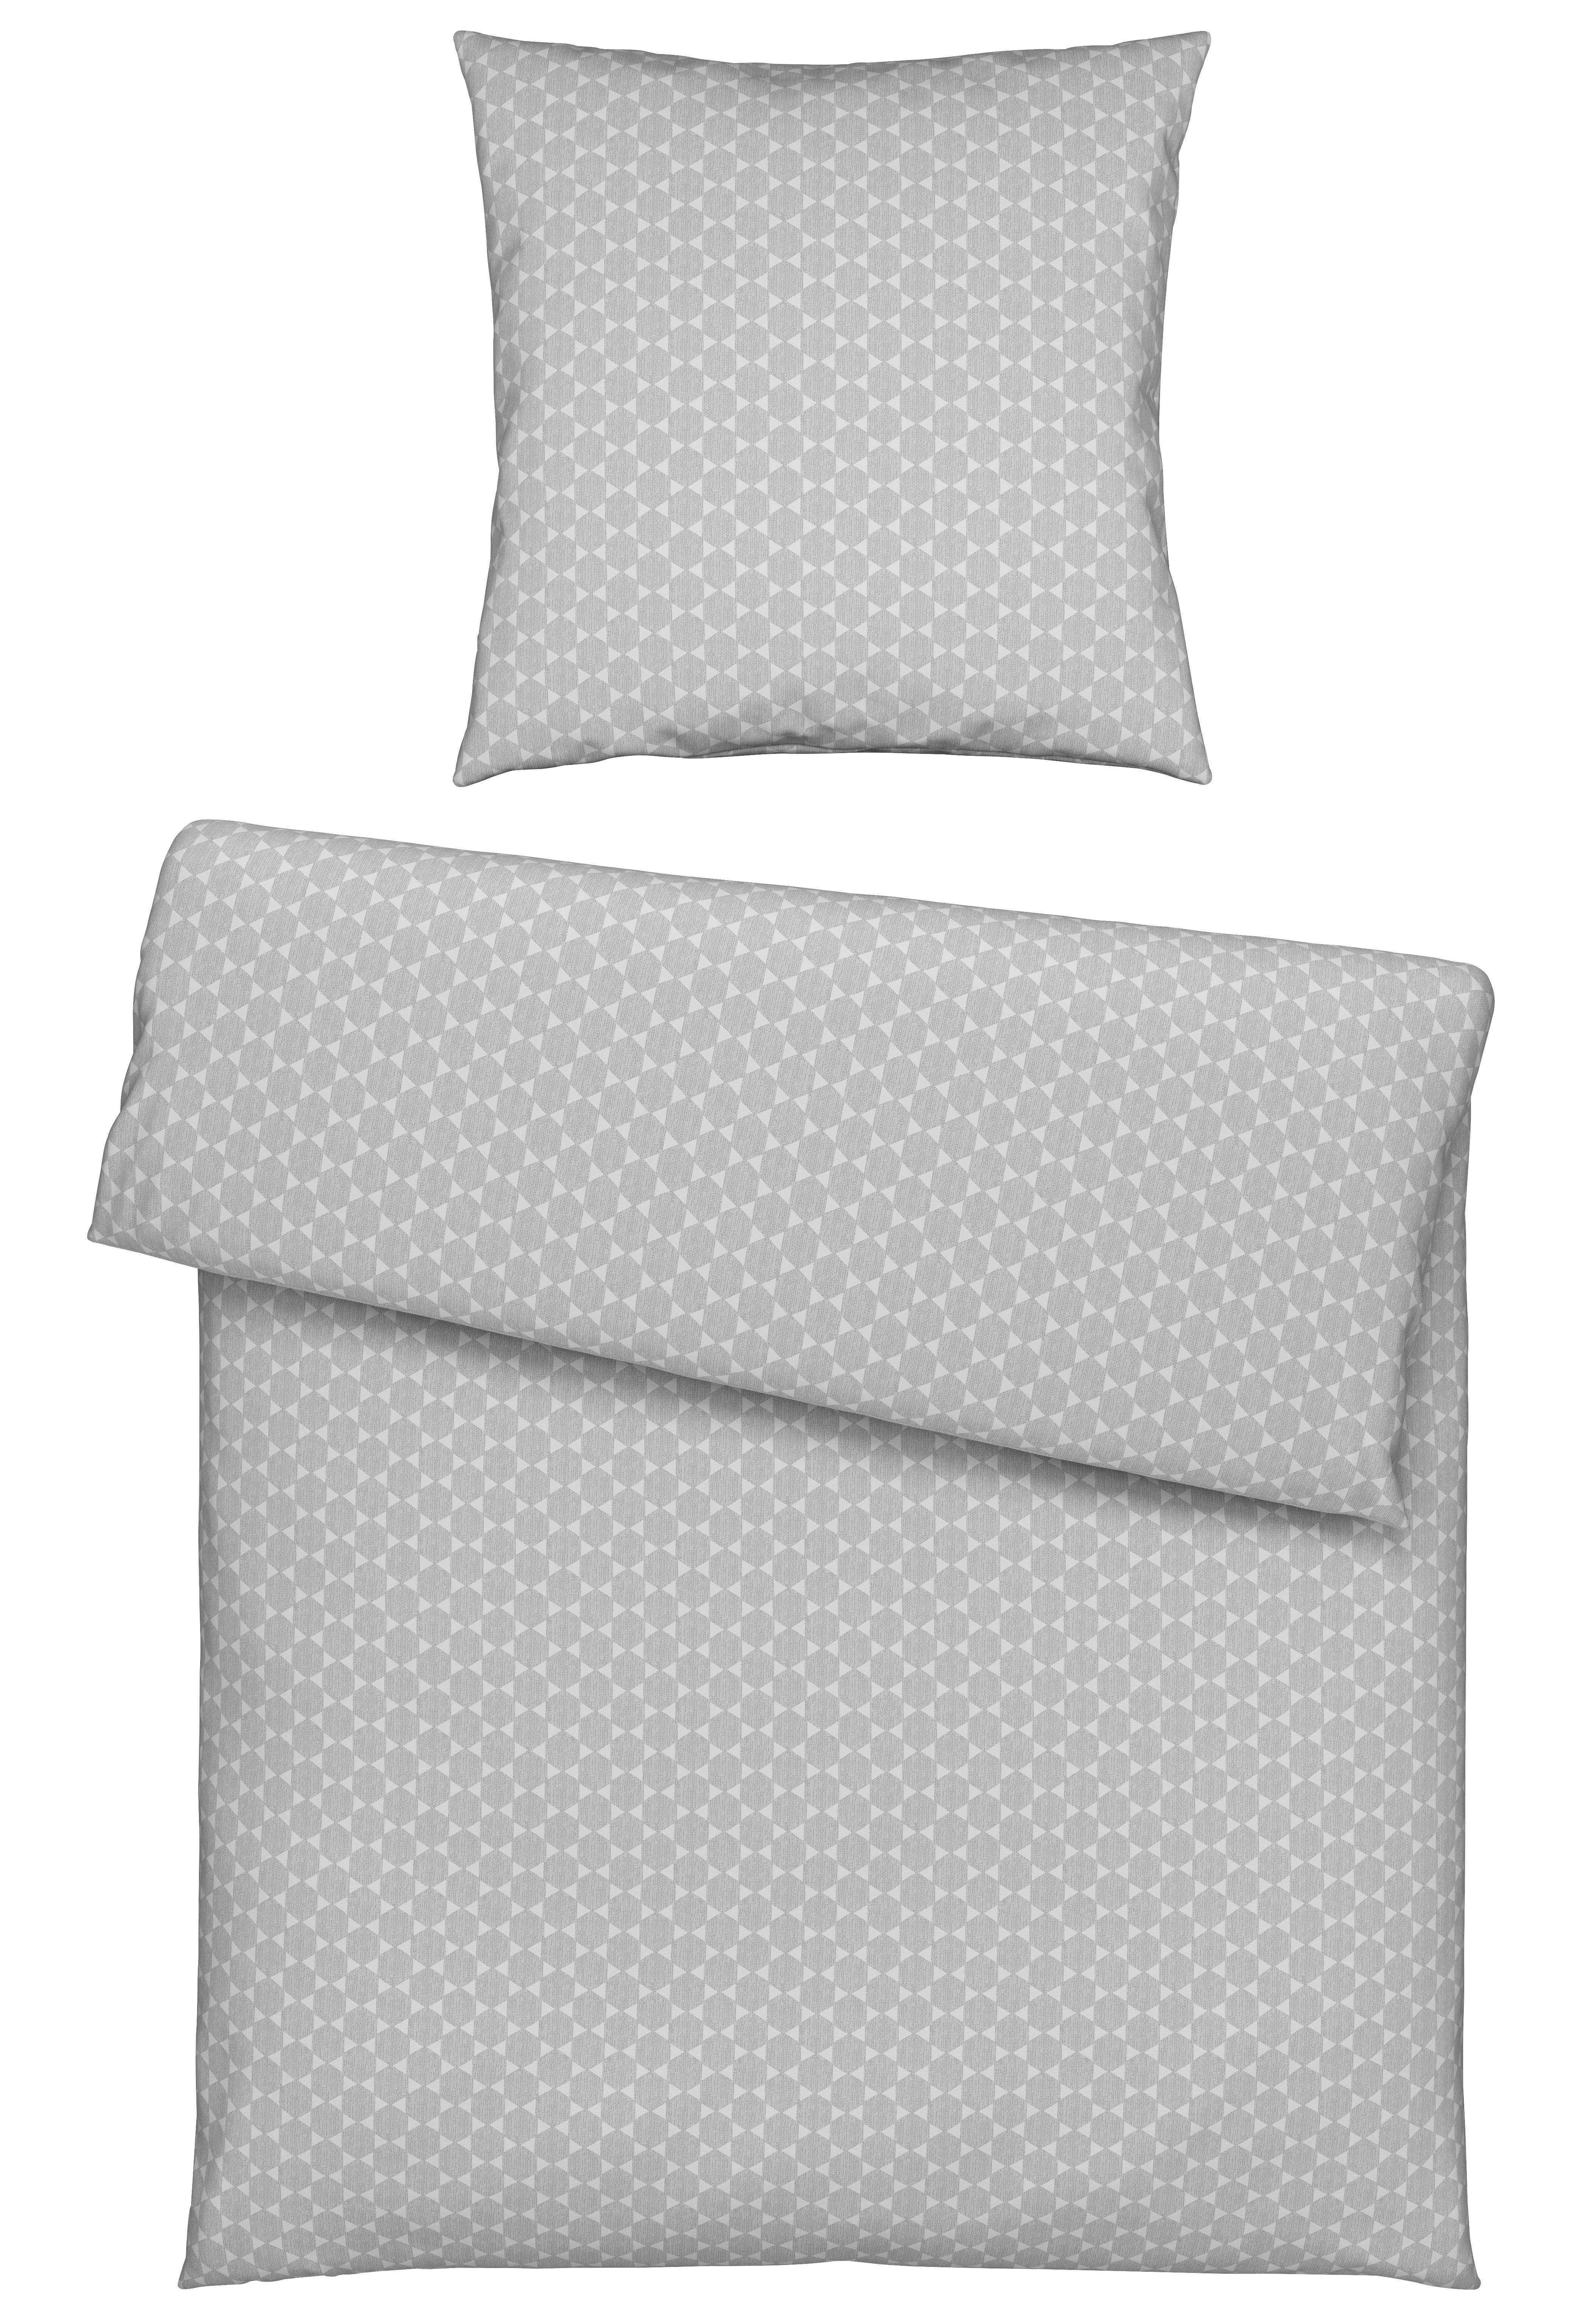 BETTWÄSCHE Renforcé  - Grau, KONVENTIONELL, Textil (135/200cm) - Boxxx